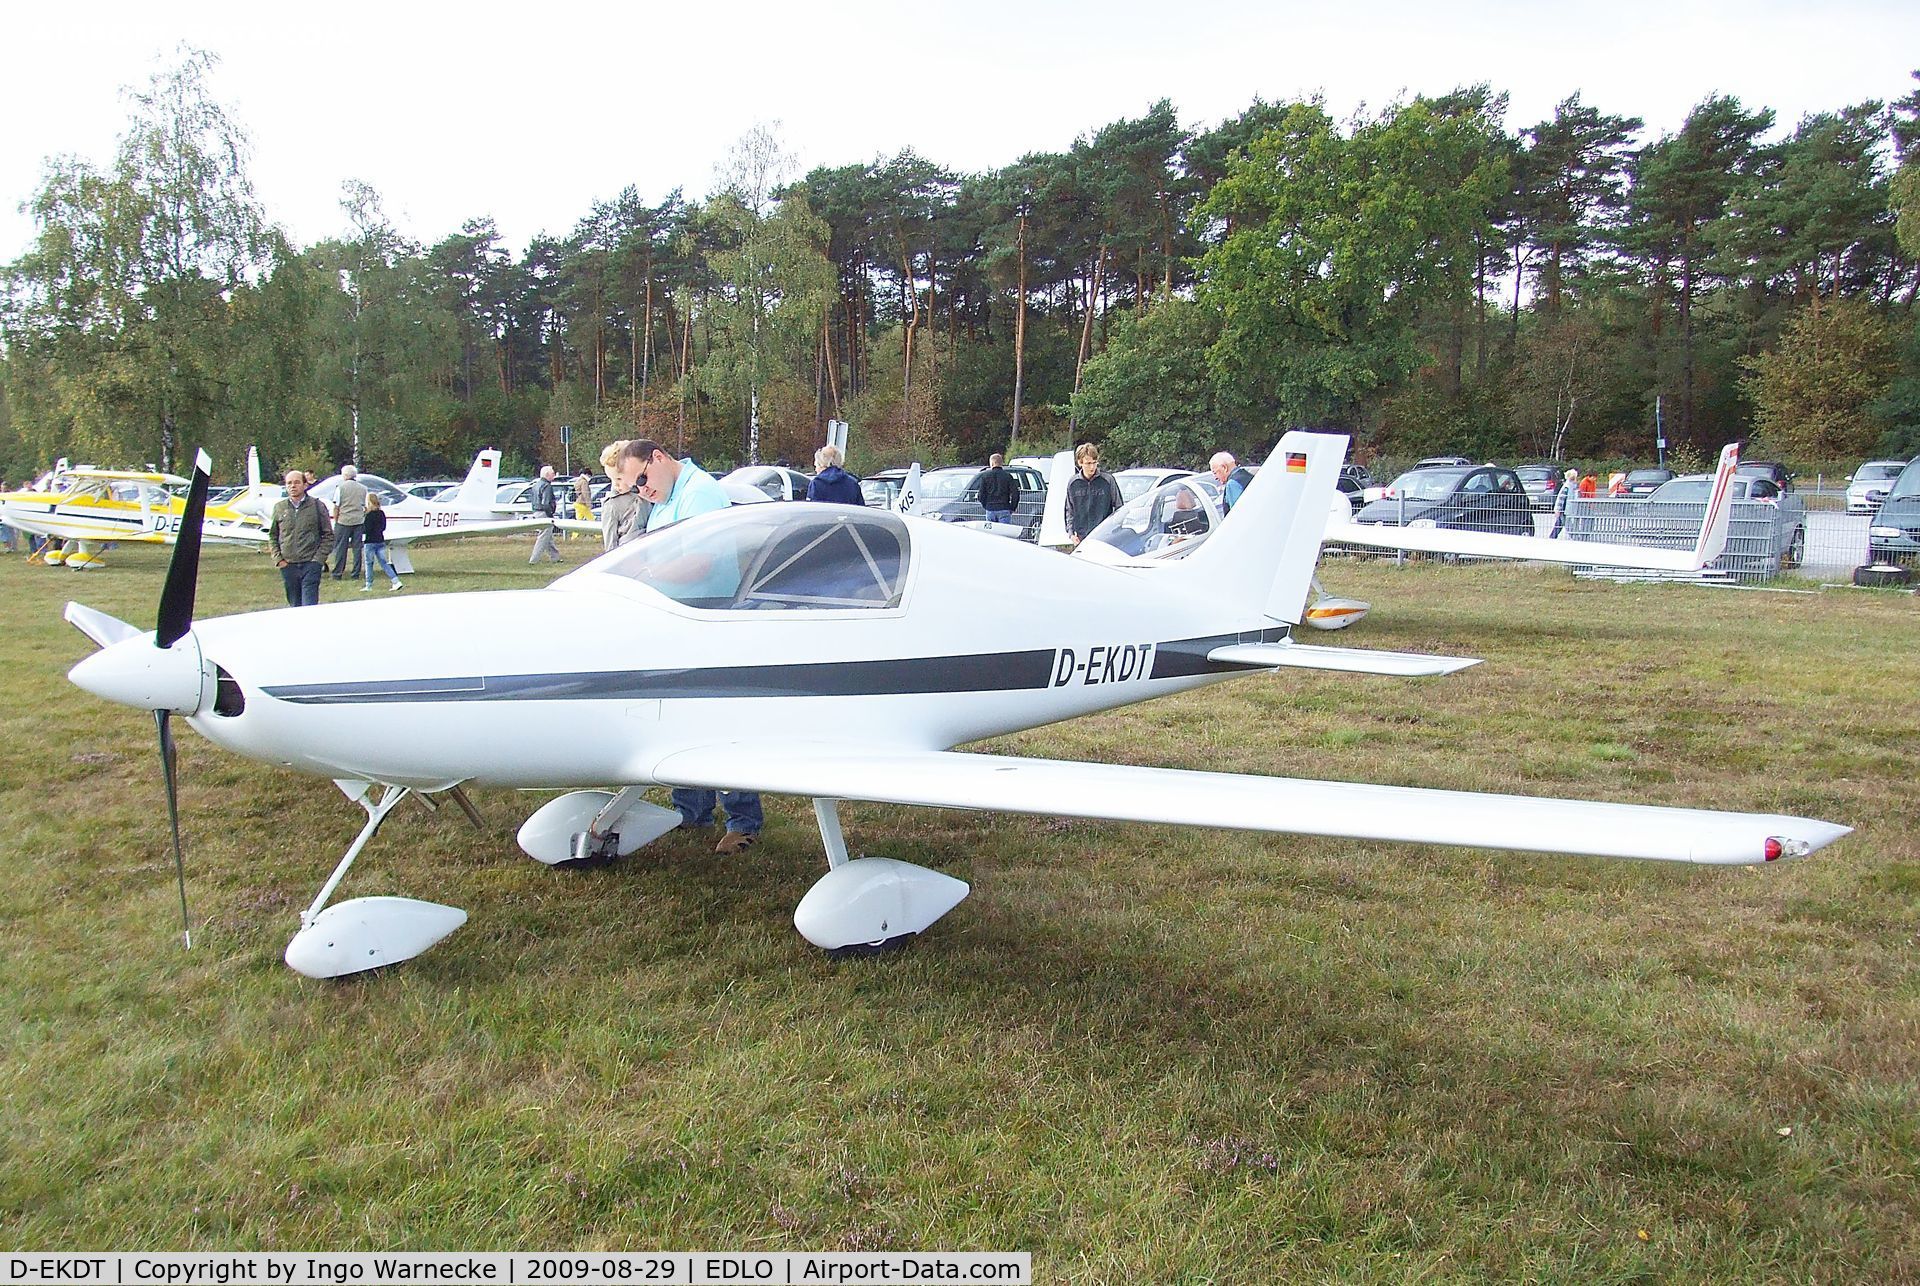 D-EKDT, 1999 Aero Designs Pulsar XP C/N 334, Aero Designs (Bahr) Pulsar XP at the 2009 OUV-Meeting at Oerlinghausen airfield